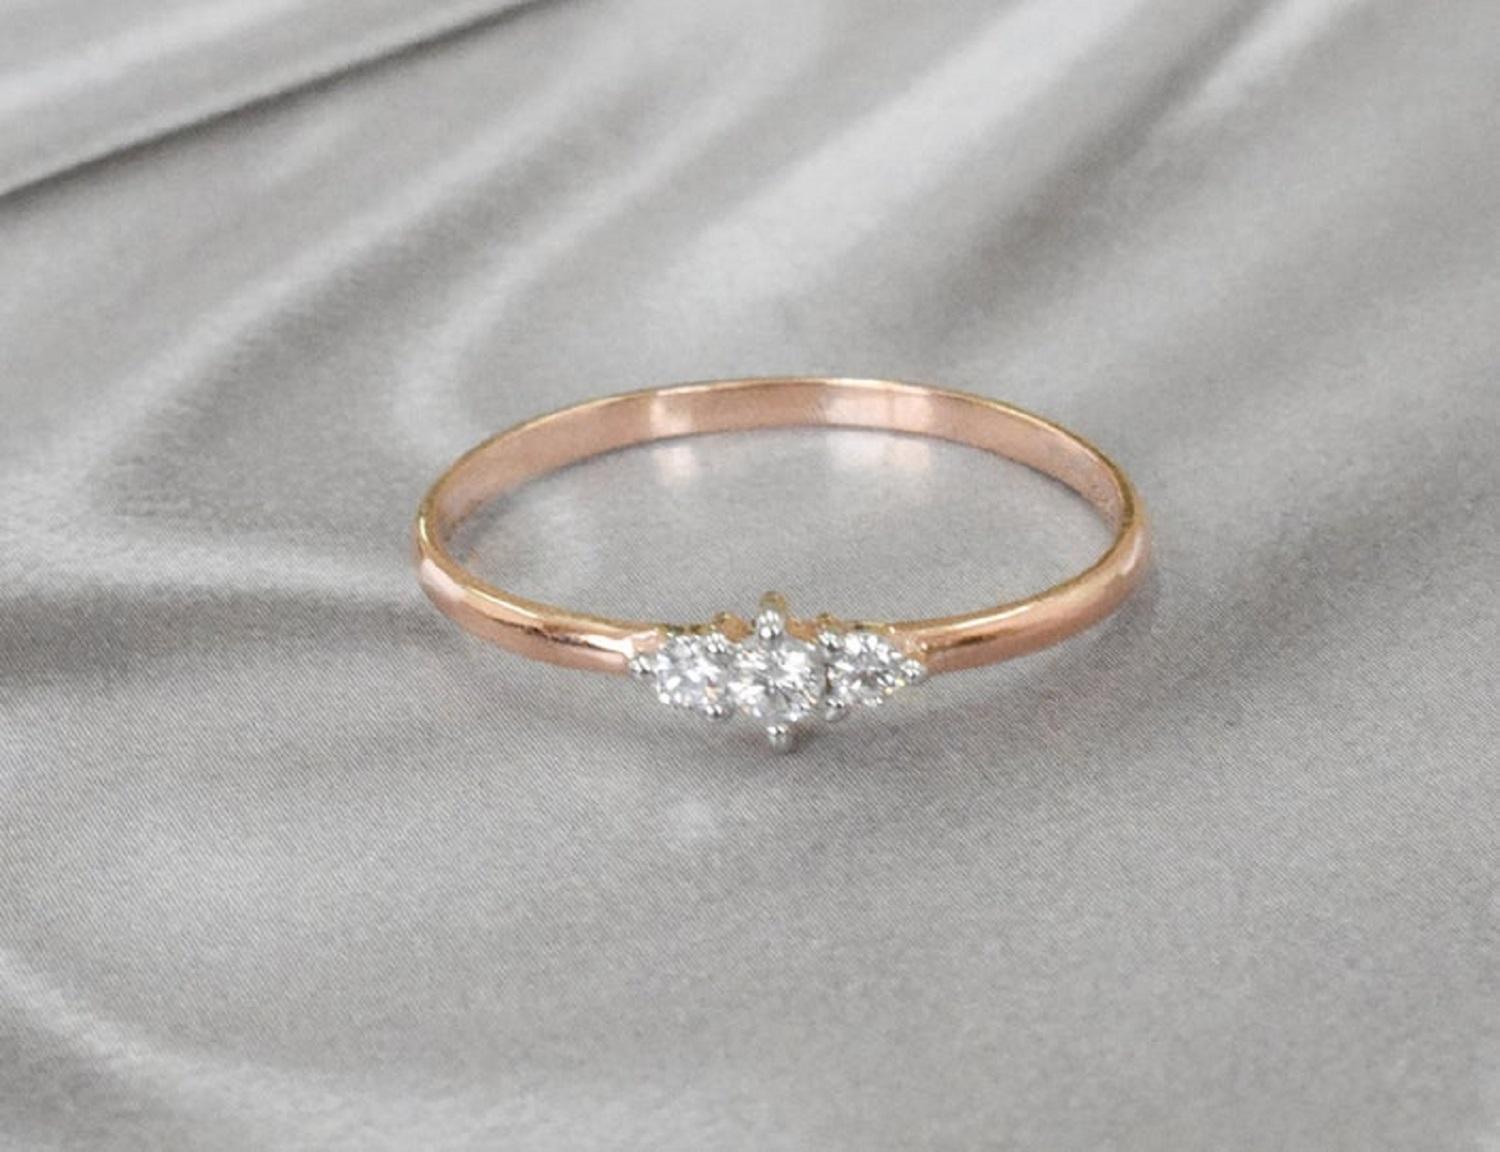 For Sale:  18k Gold Three Stone Diamond Engagement Ring Trio Diamond Ring 7